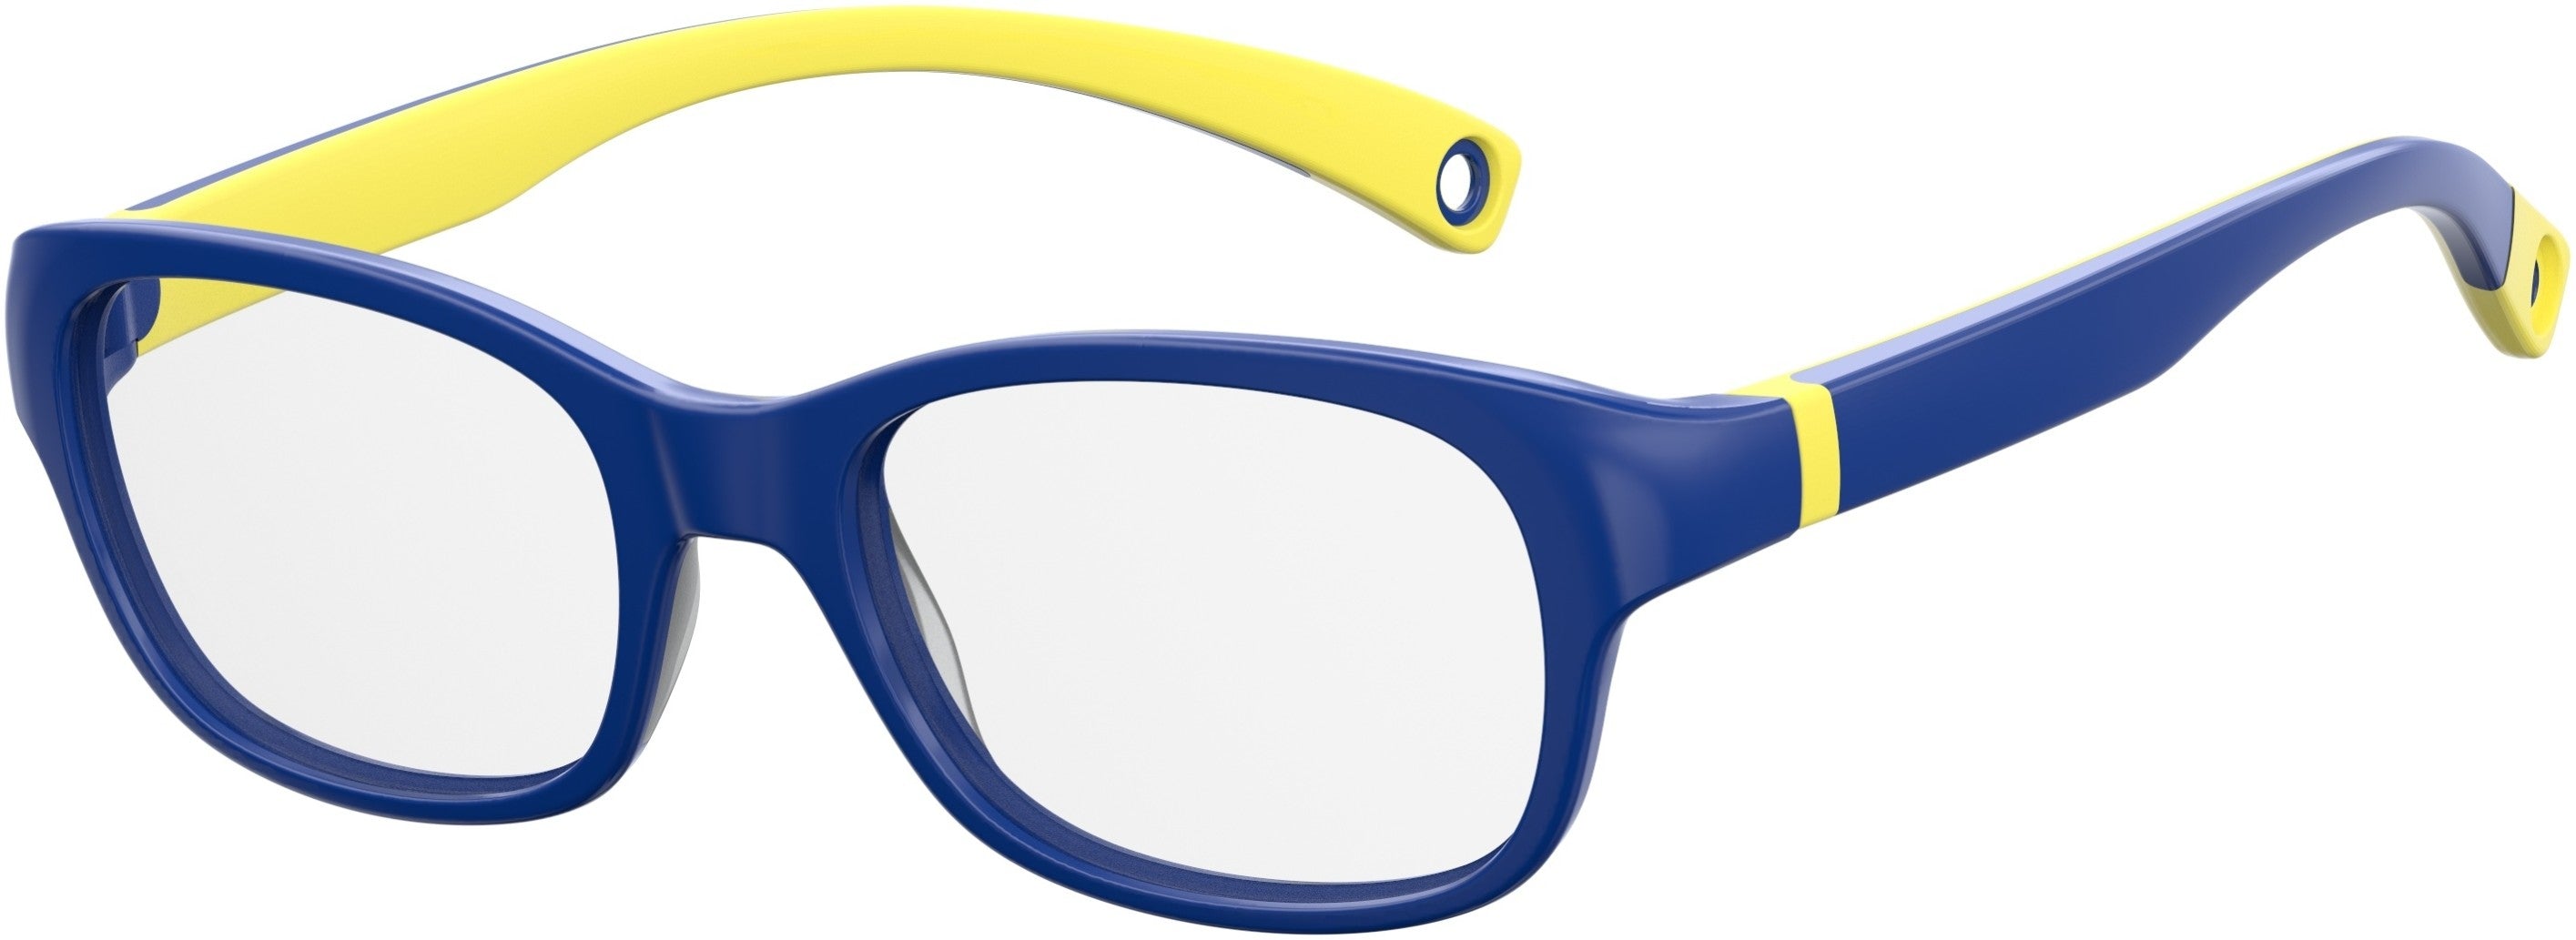 Safilo Safilo Kids Safilo 0007 Rectangular Eyeglasses 0DCD-0DCD  Blue Yellow (00 Demo Lens)